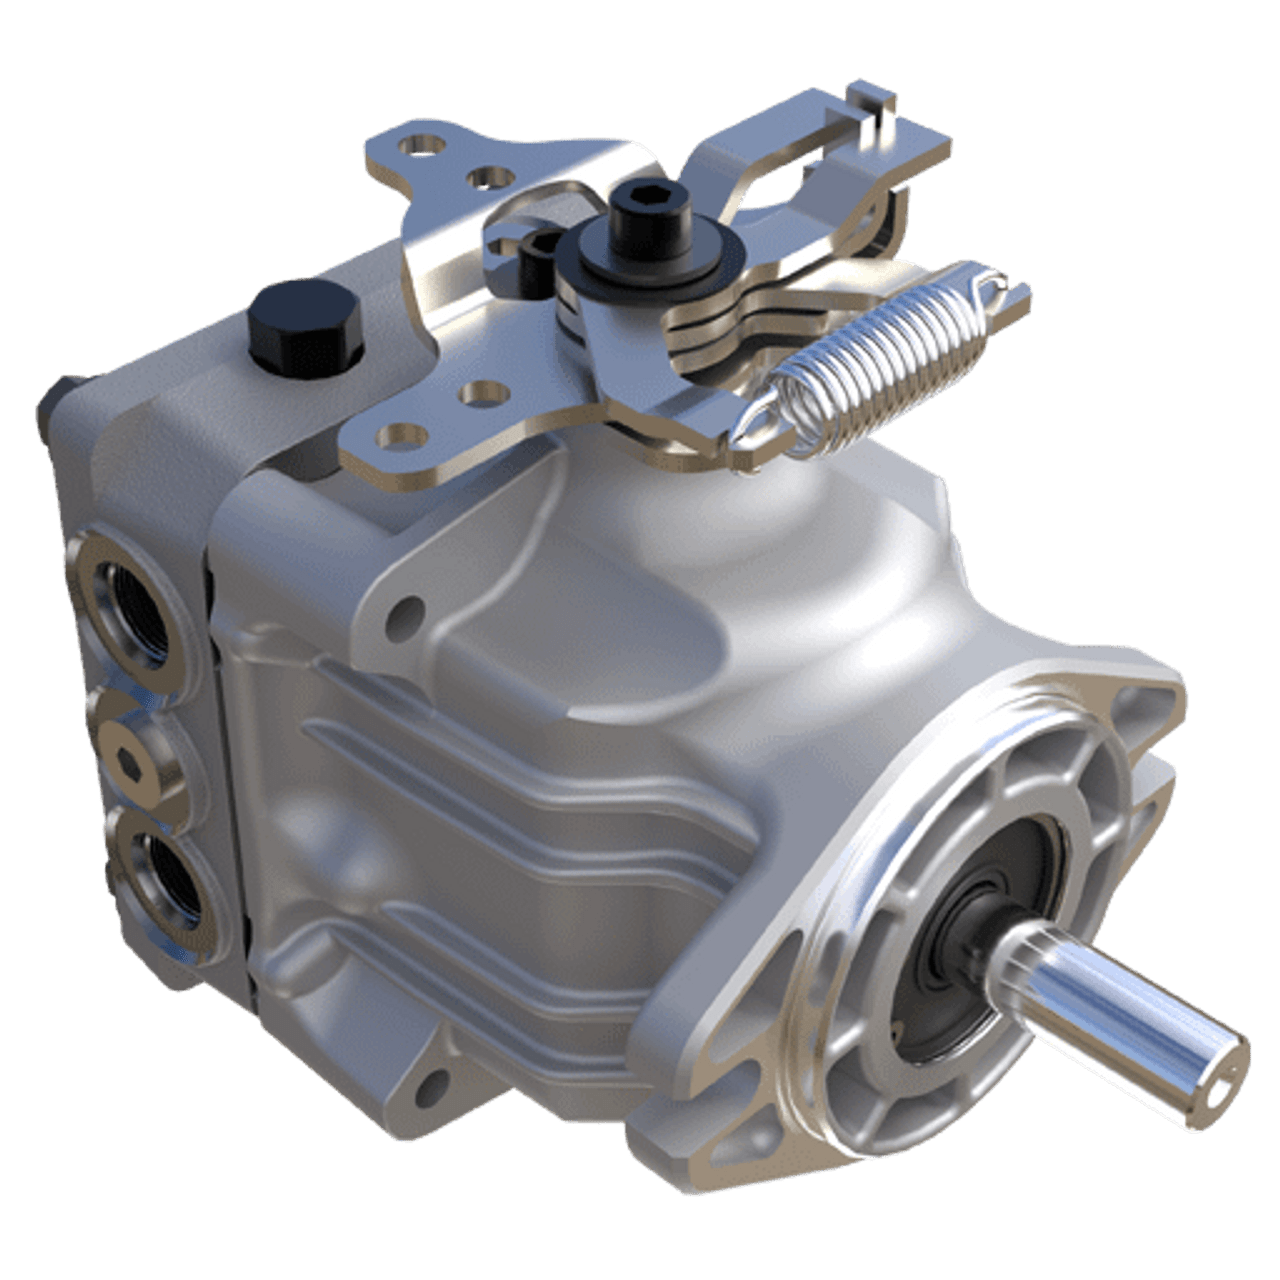 Hydro Gear PE-1GQQ-DY1X-XXXX Hydraulic Pump P Series | Original OEM Part | Free Shipping - LawnMowerPartsWorld.com